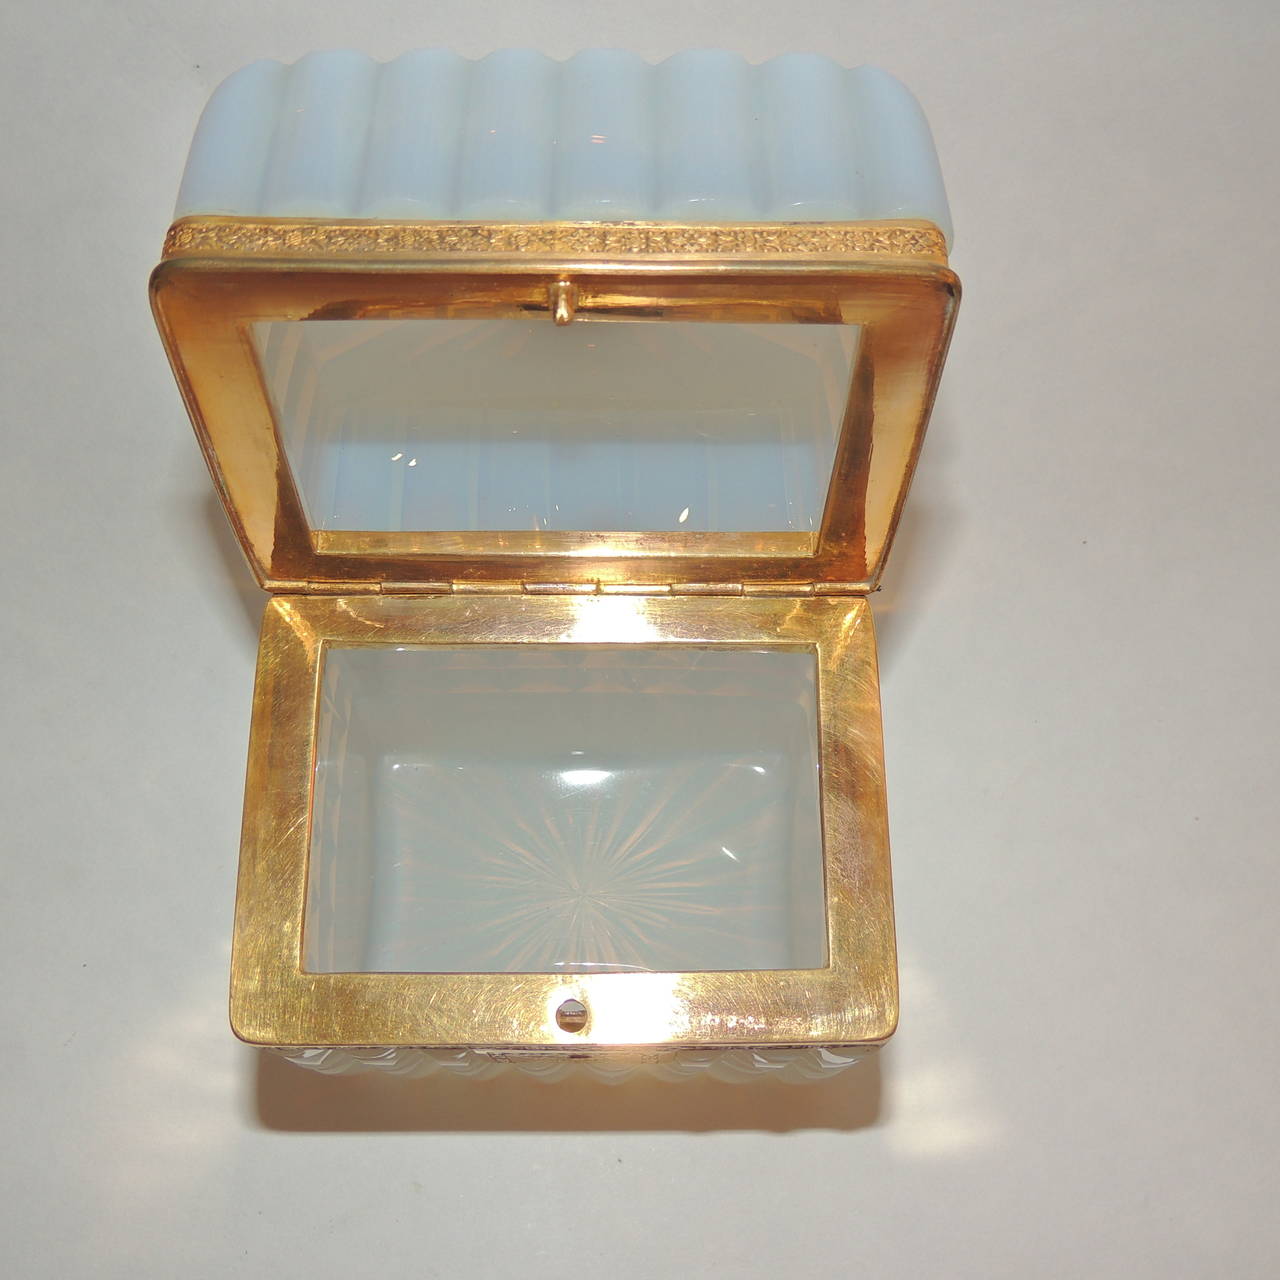 Rare French White Opaline Ribbed Ormolu Dore Glass Casket Box with Key 1